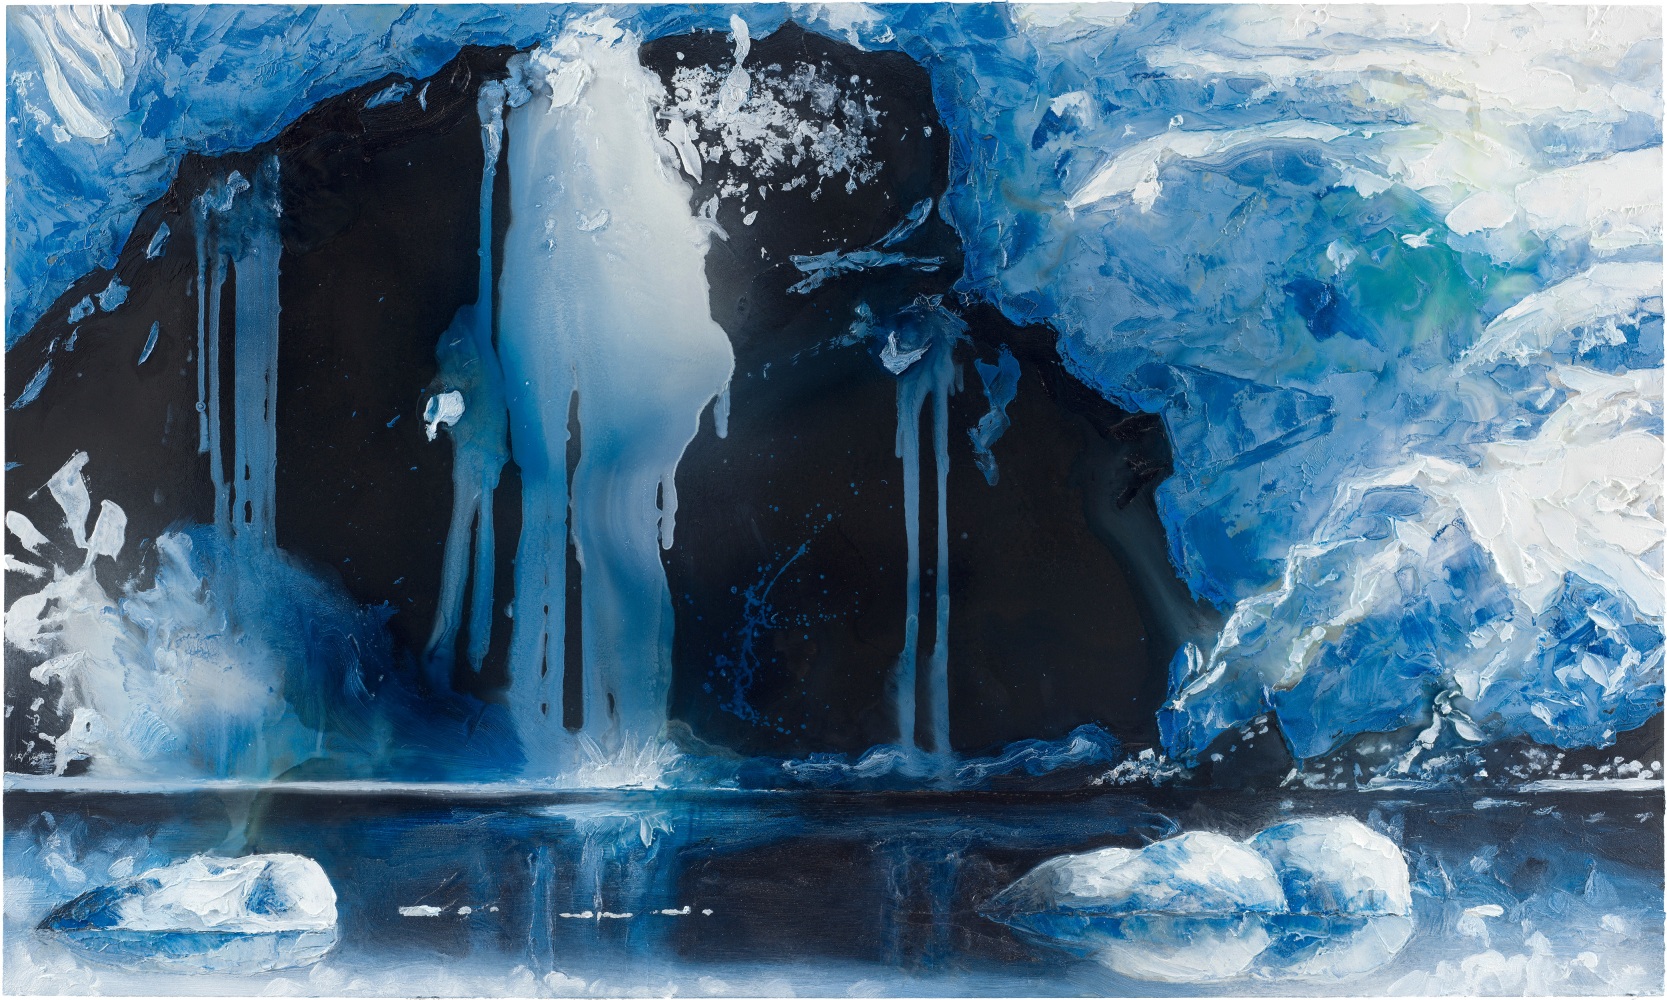 A blue glacier melts into a dark sea